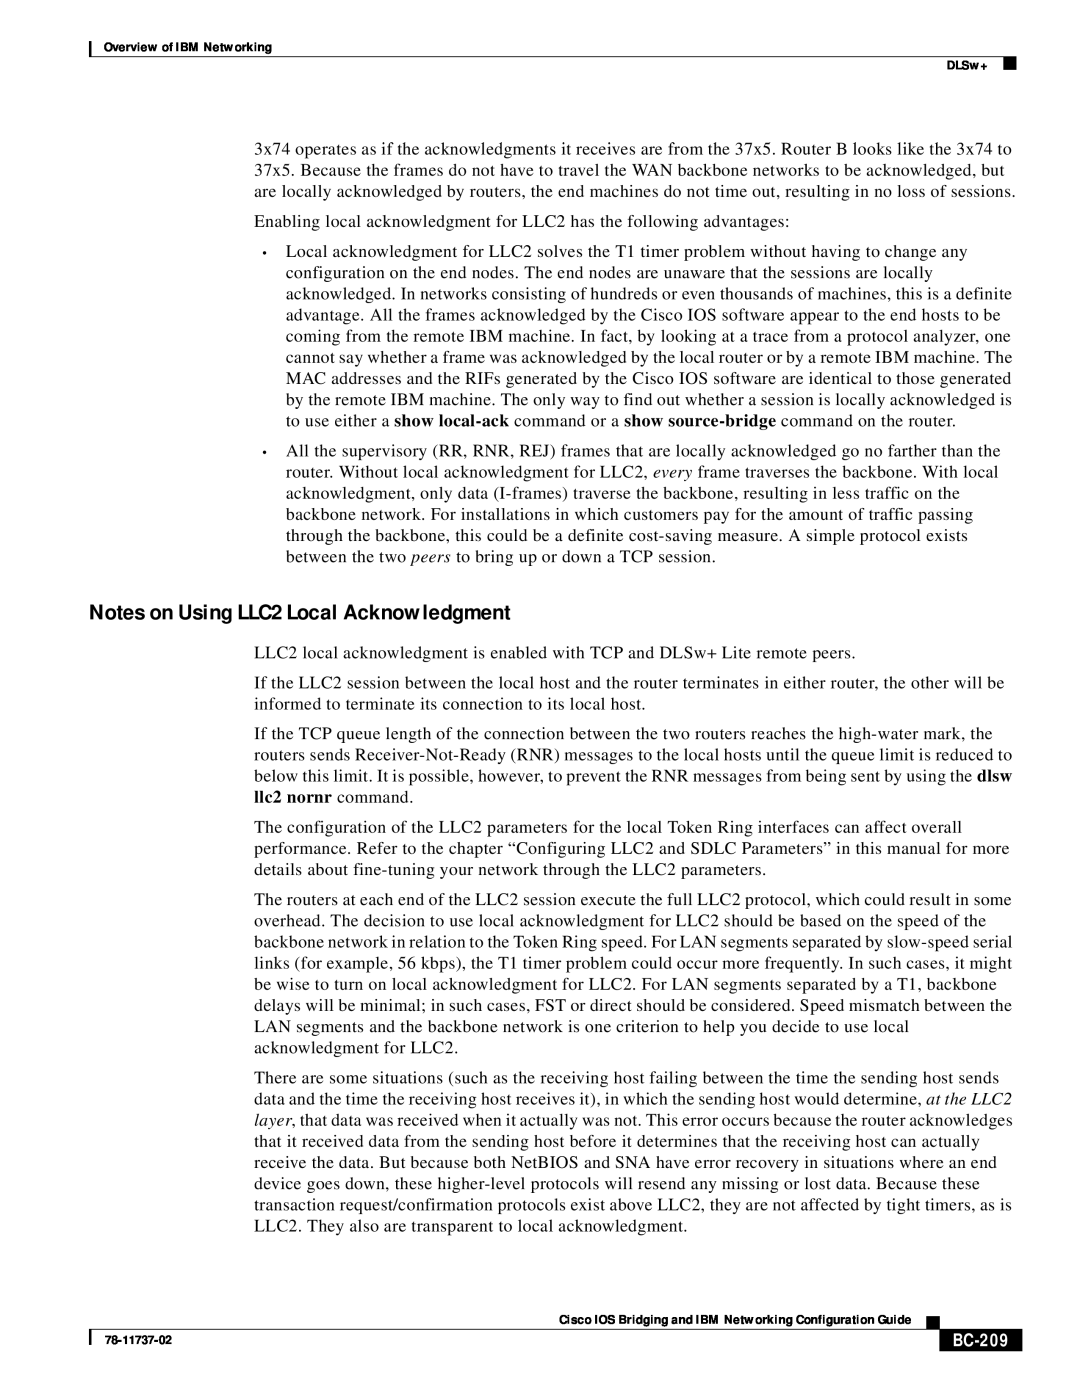 IBM BC-201 manual Notes on Using LLC2 Local Acknowledgment, BC-209 